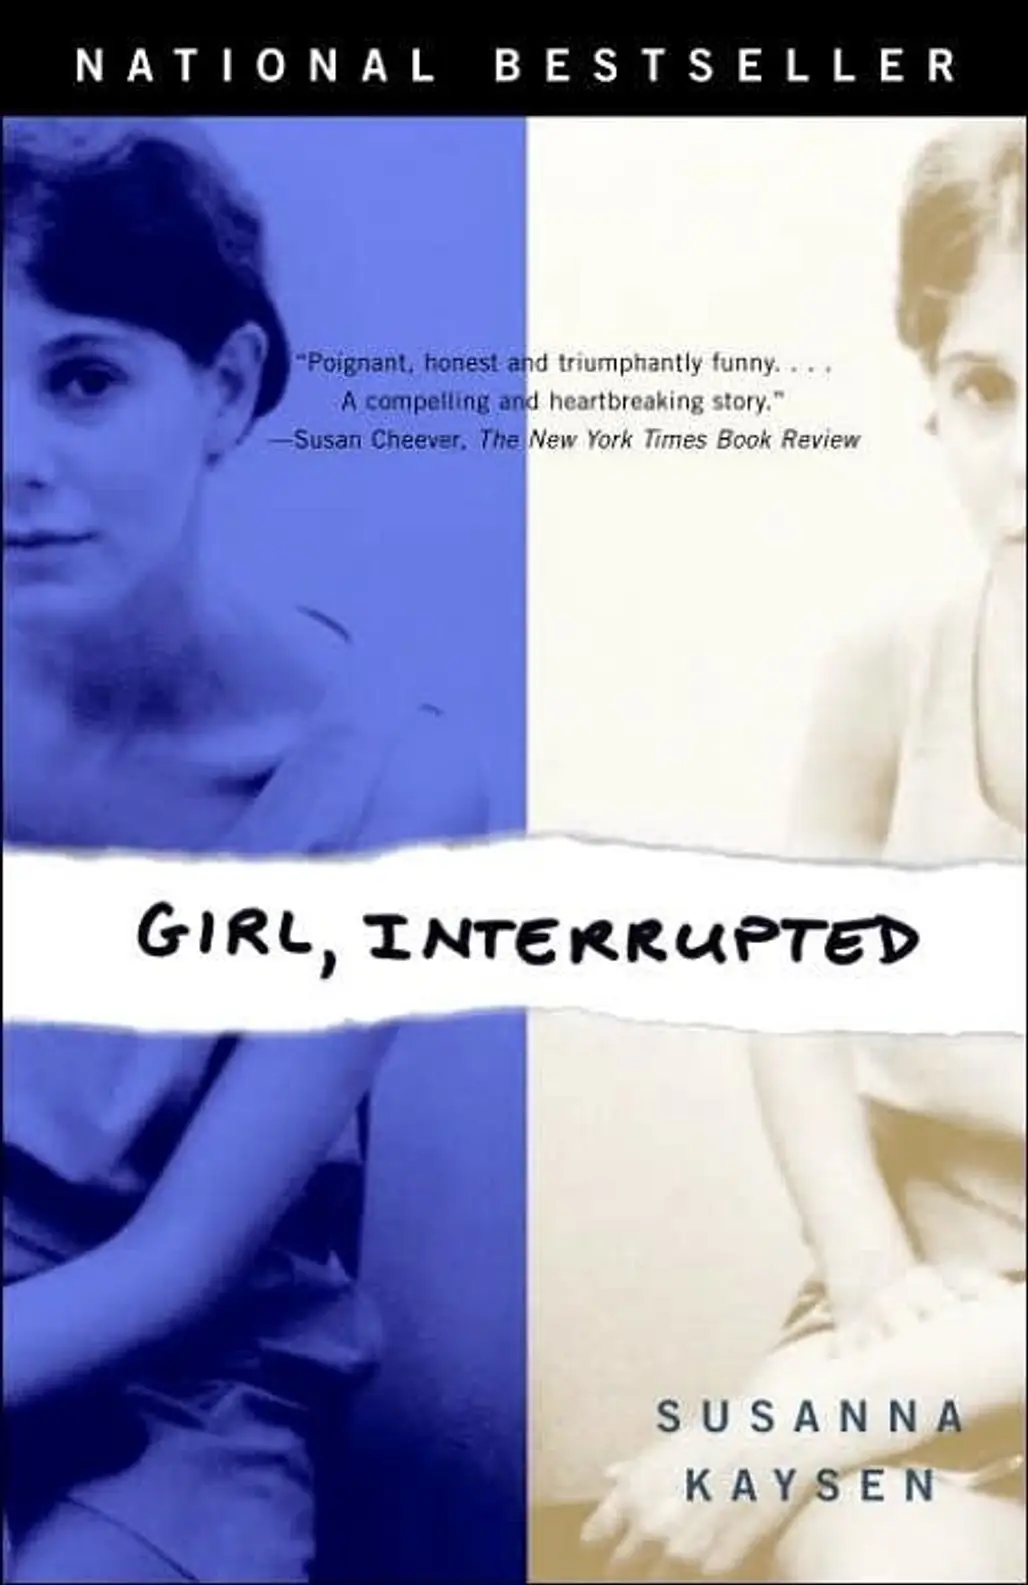 ‘Girl, Interrupted’ by Susanna Kaysen